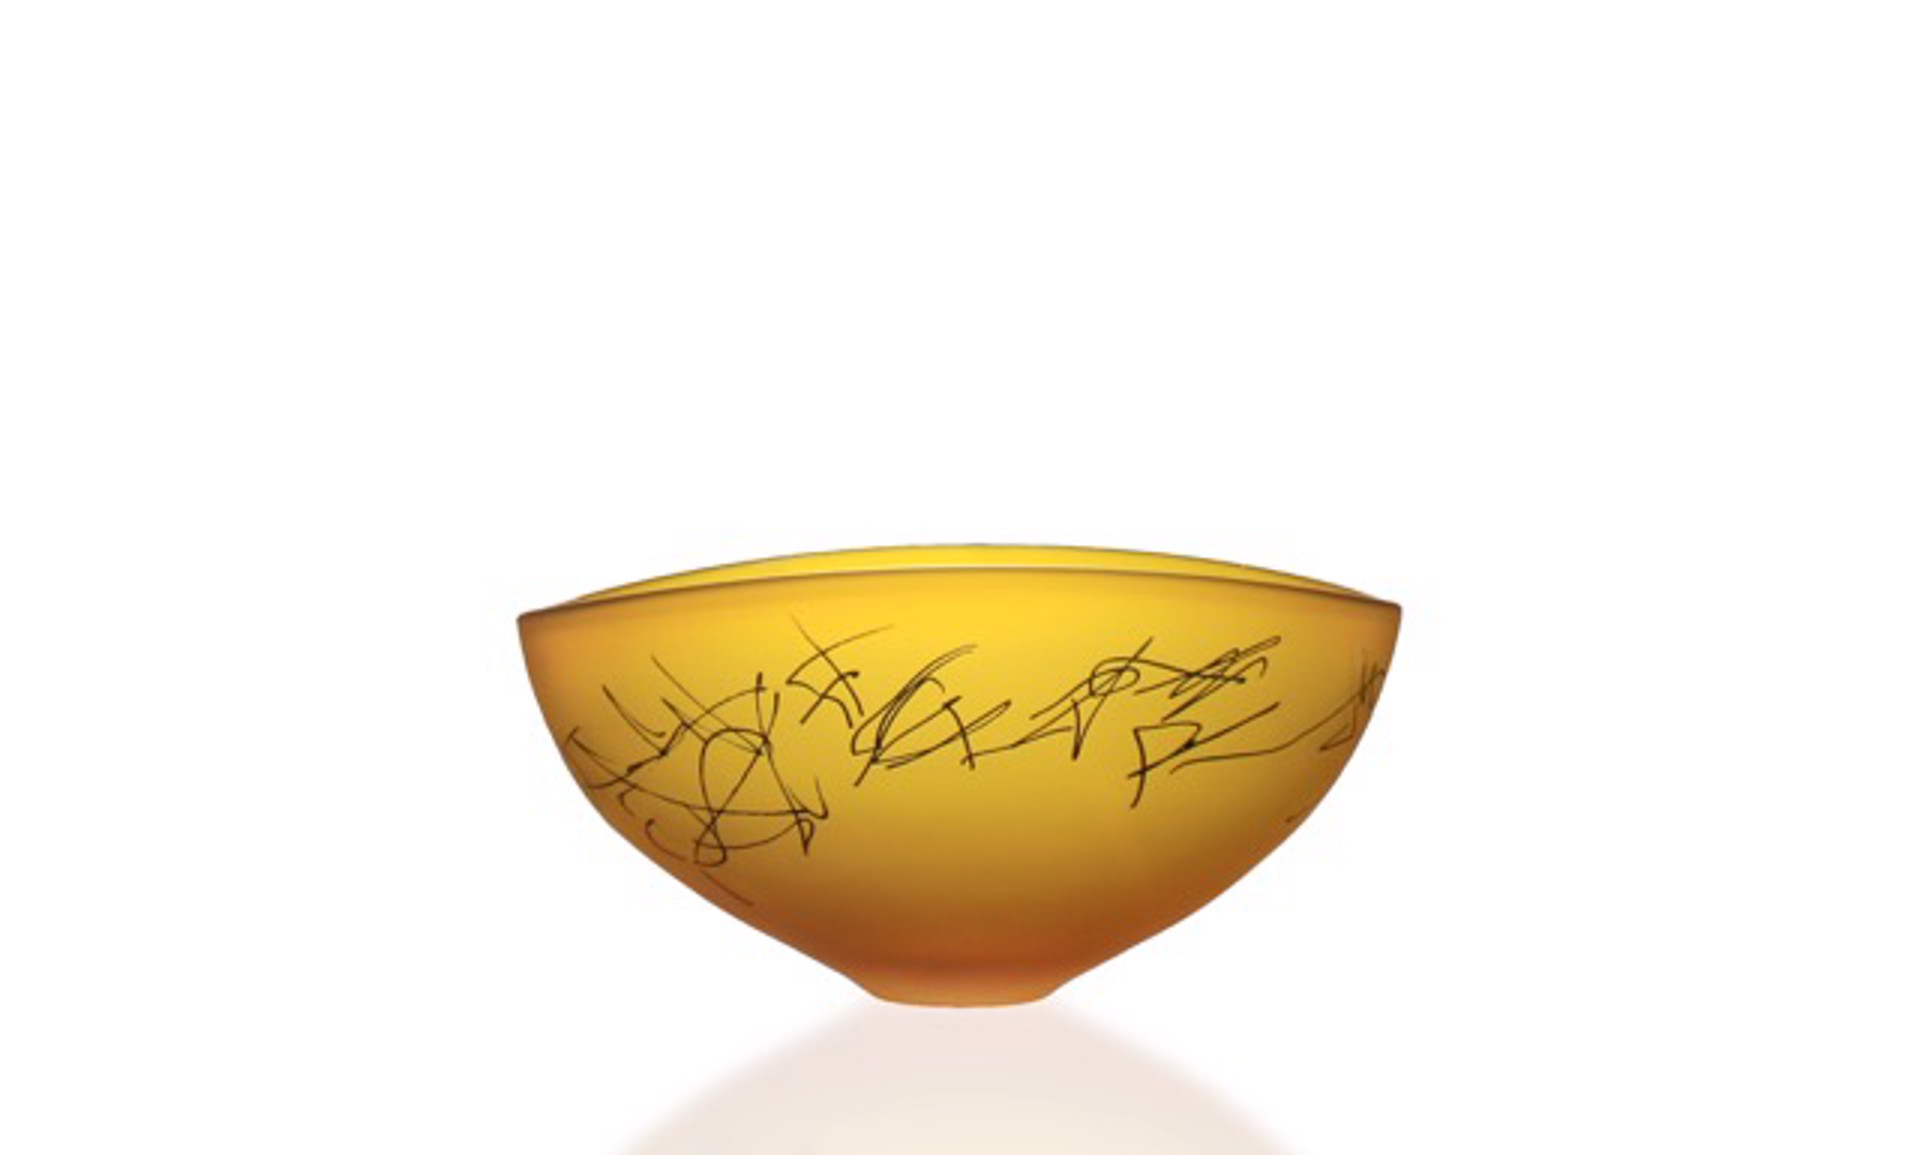 Brilliant Gold Scribe Bowl by Jeff Goodman Studio